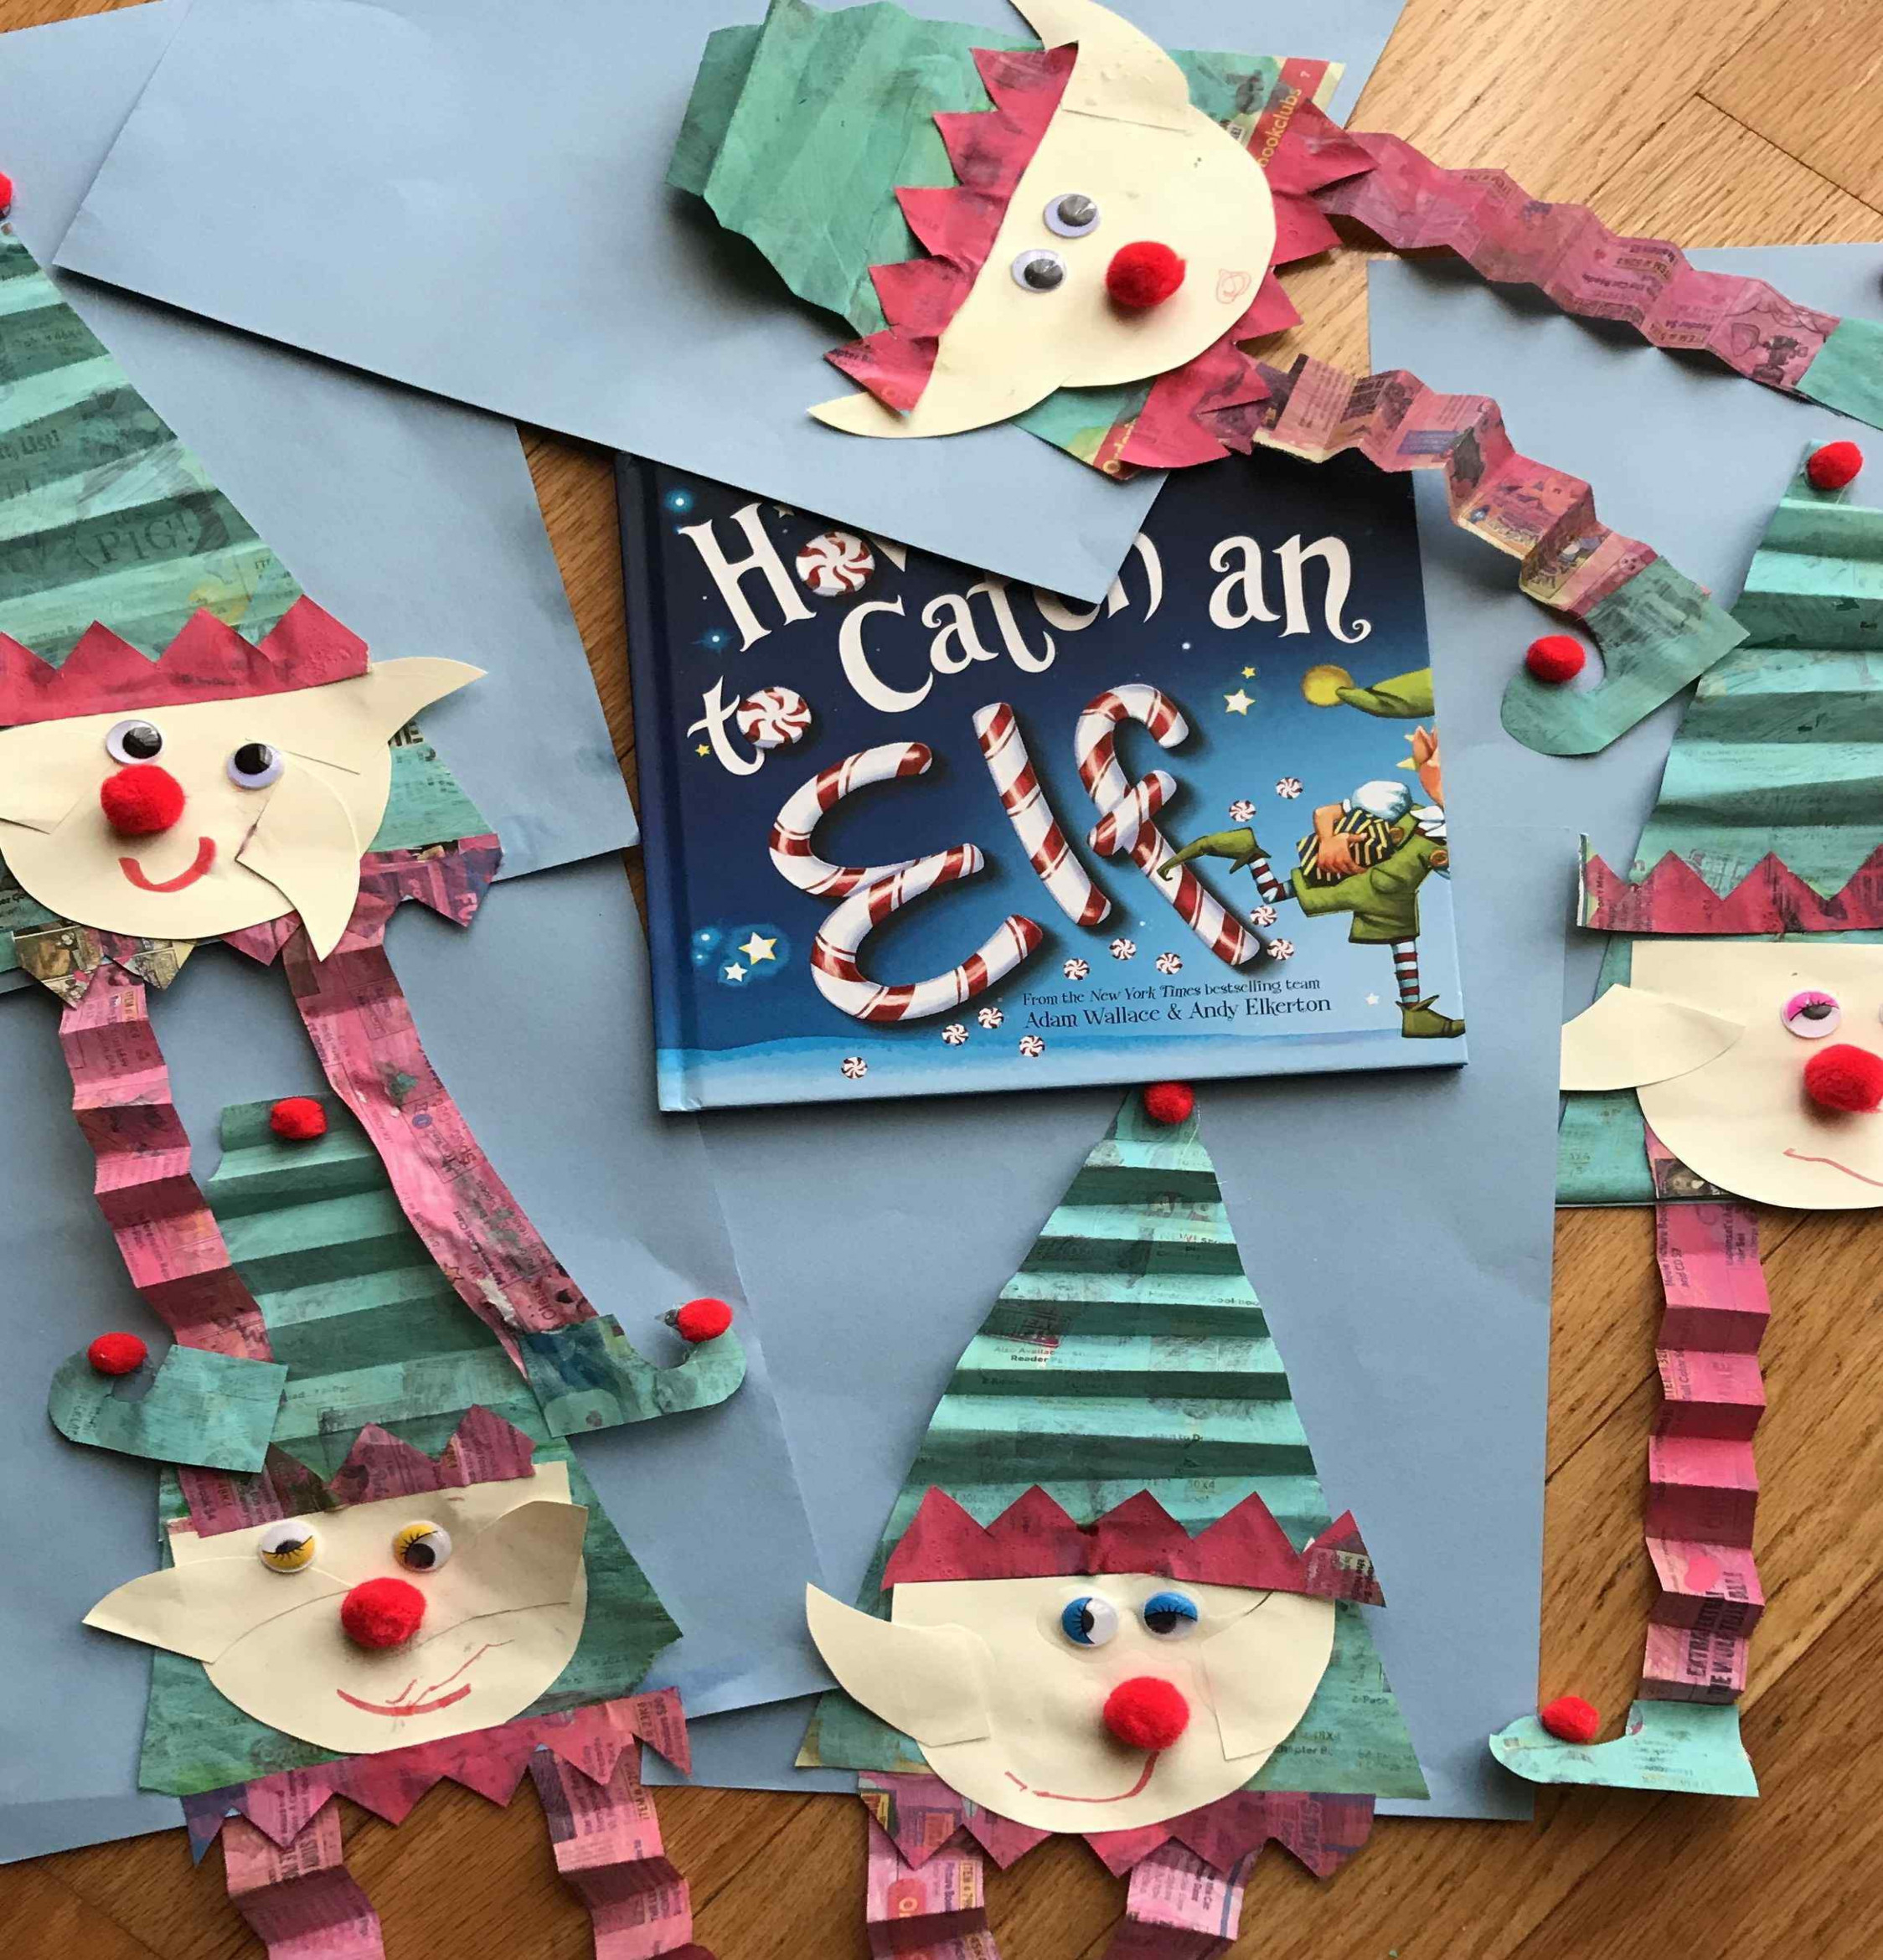 10 Best Christmas Craft Ideas On Pinterest christmas crafts with kids pinterest xmas craft ideas trend elegant 2022